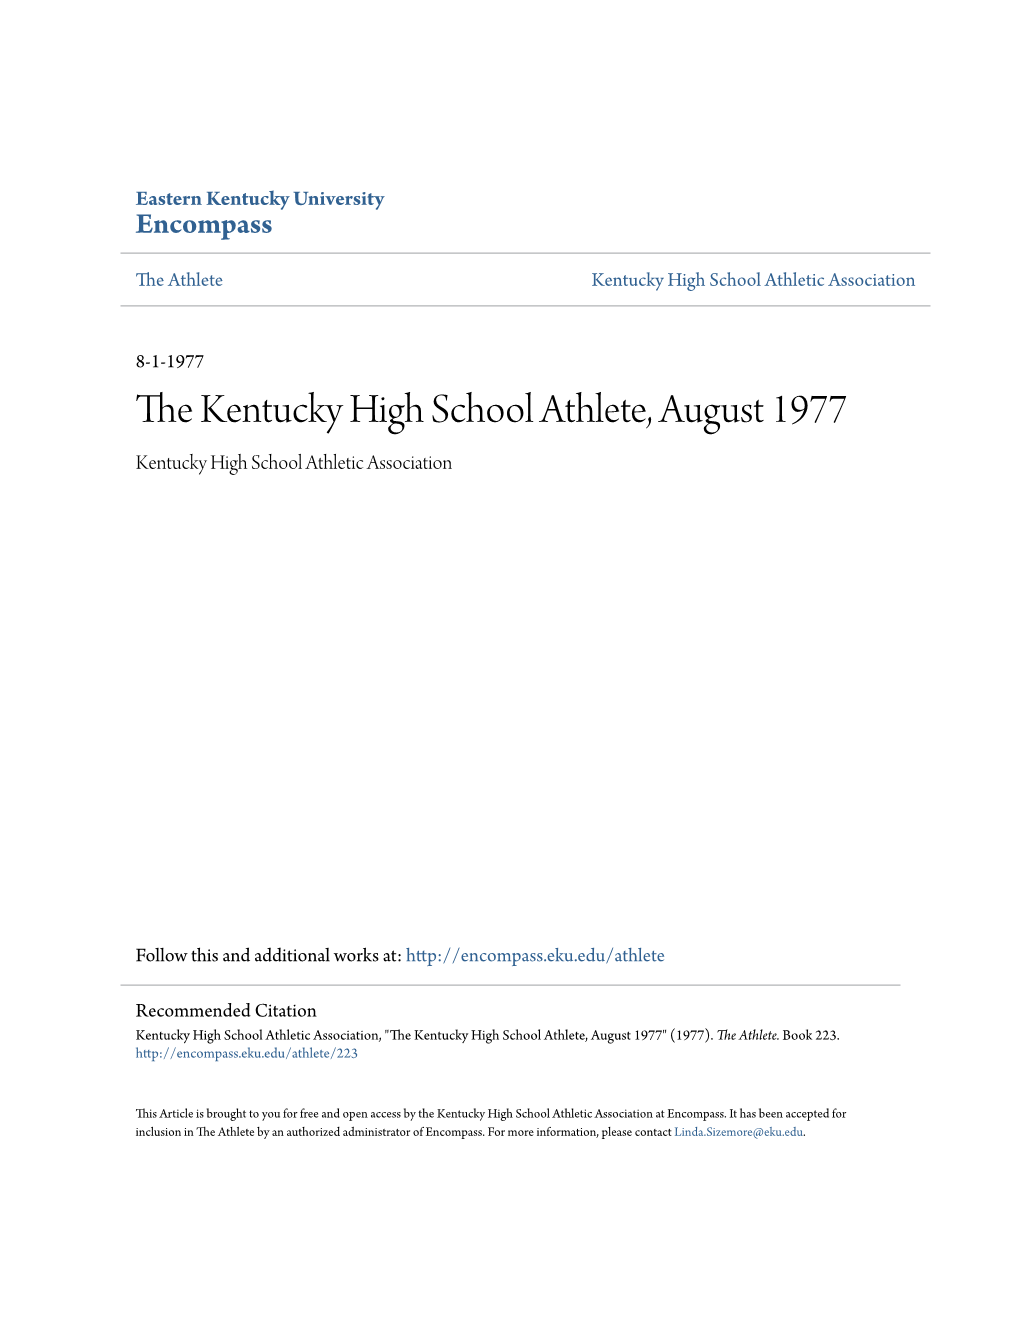 The Kentucky High School Athlete, August 1977 Kentucky High School Athletic Association